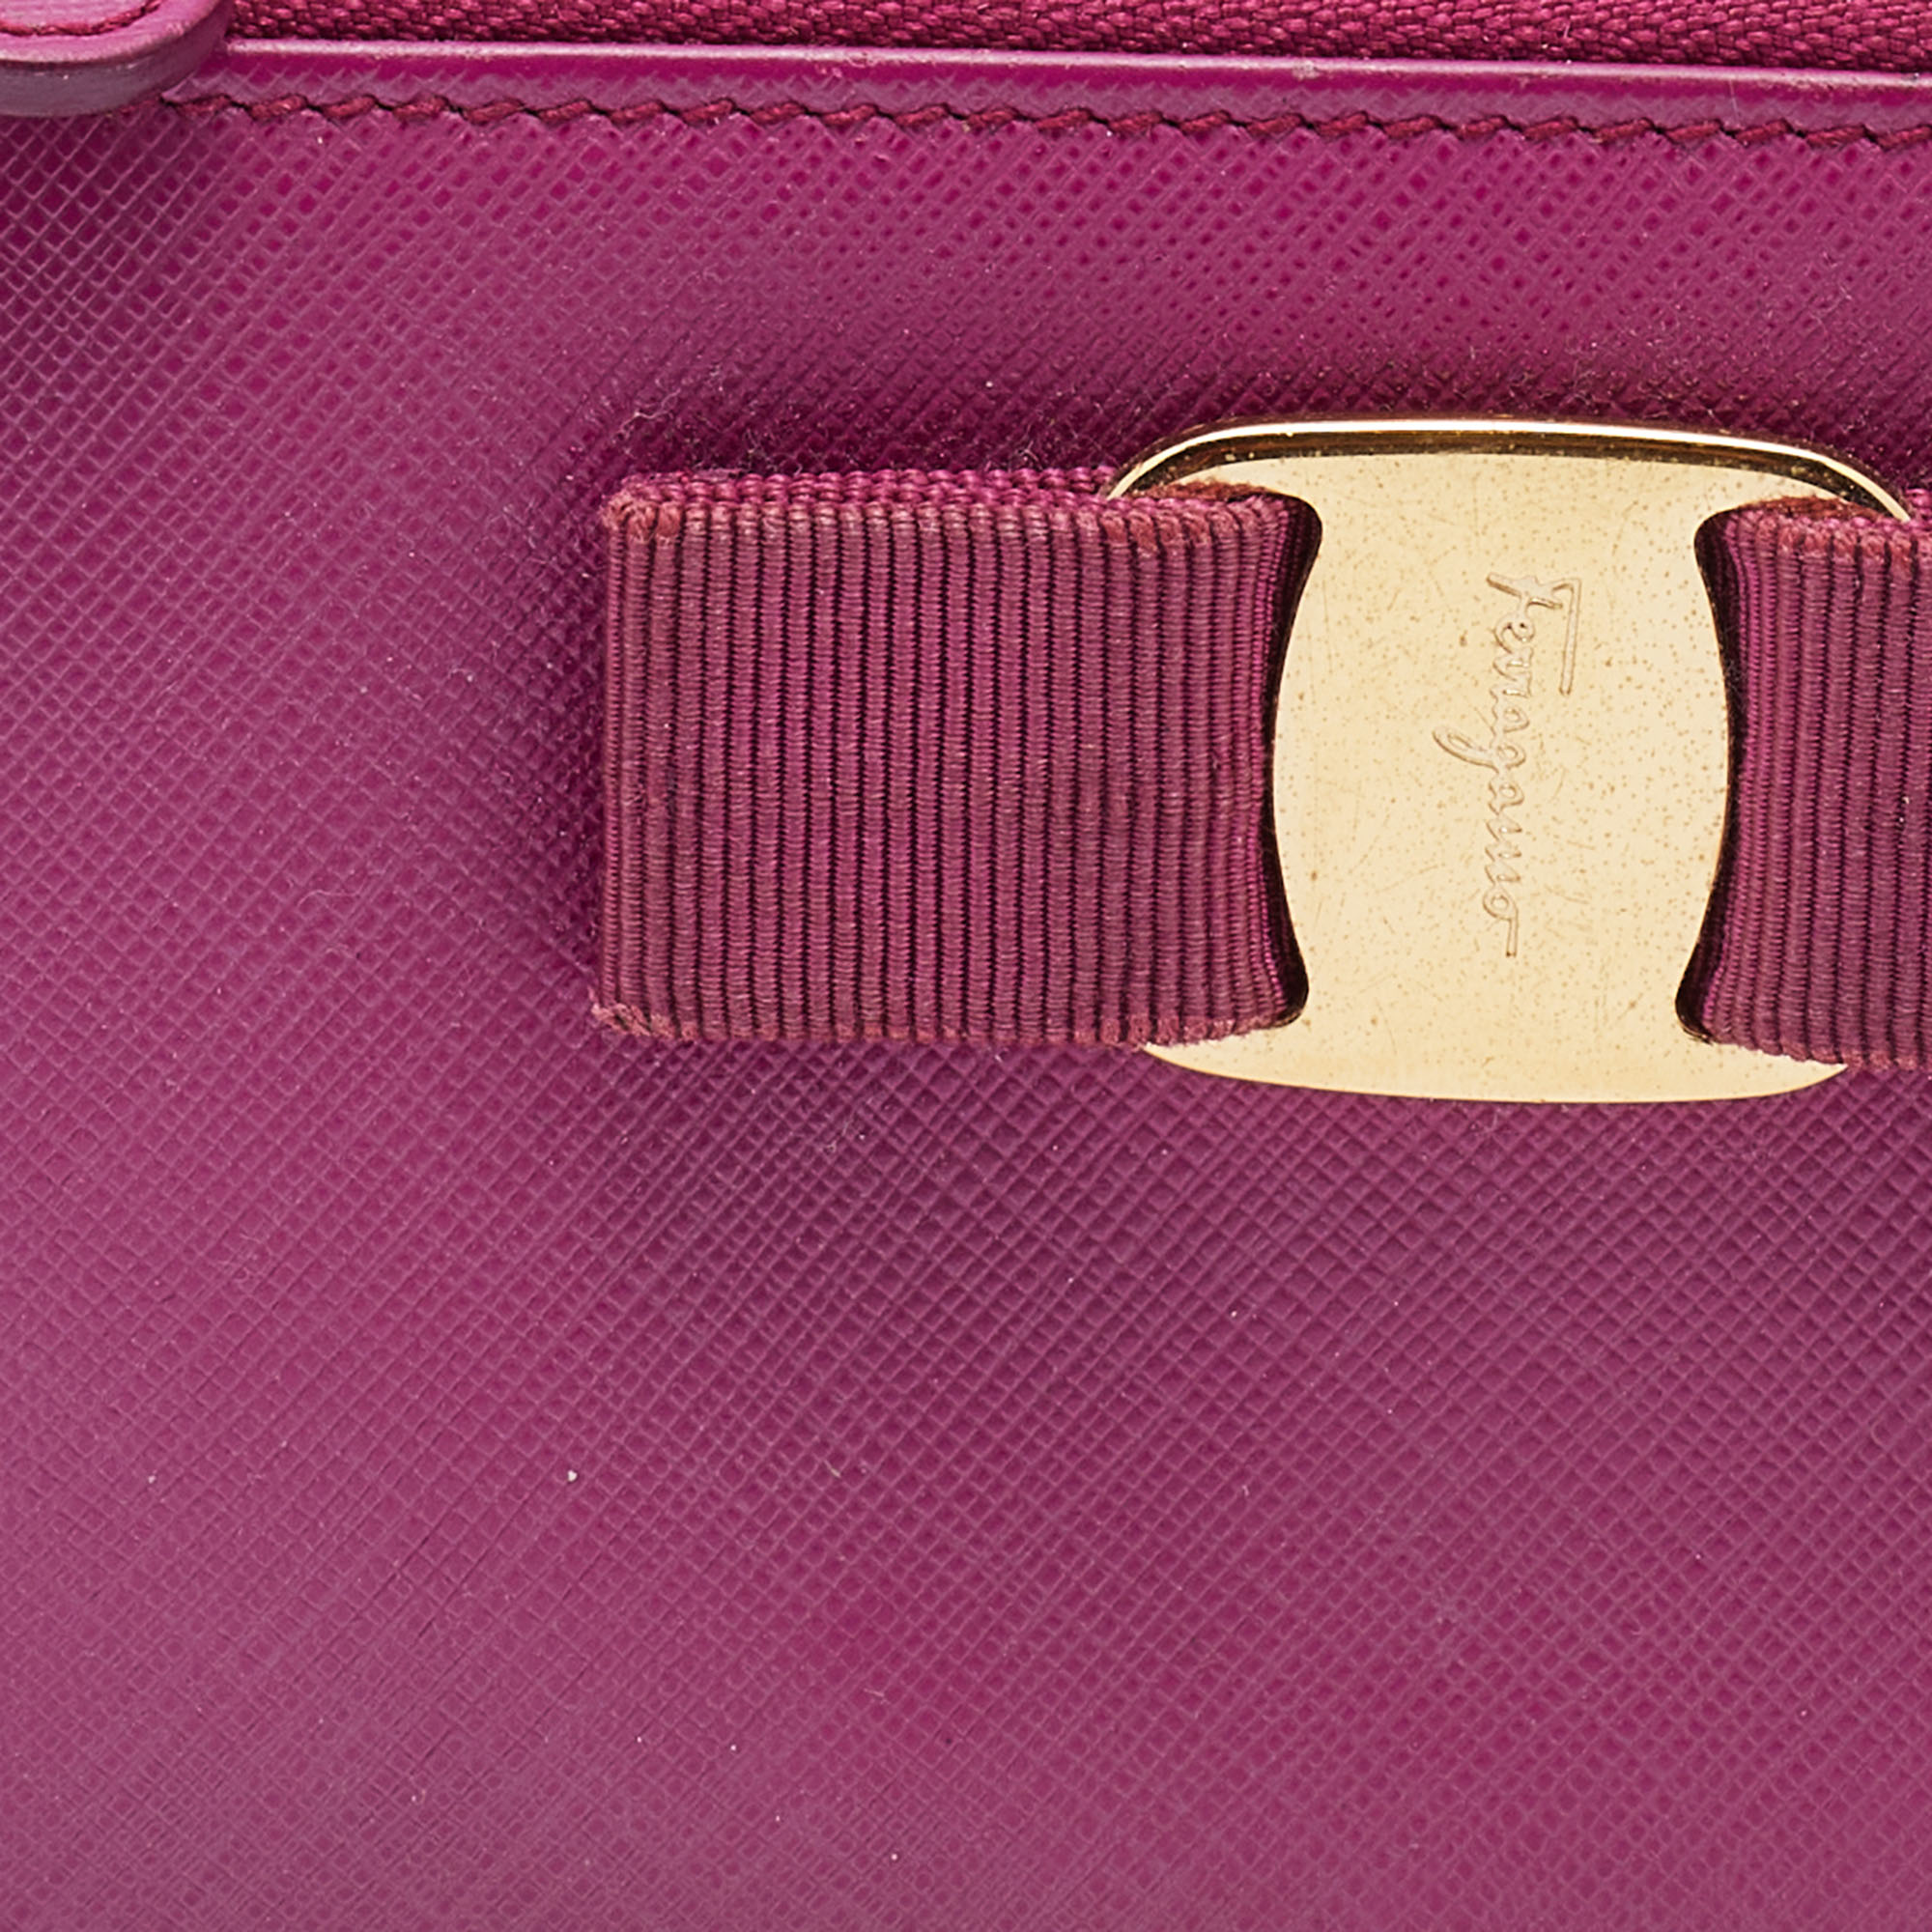 Salvatore Ferragamo Pink Saffiano Leather Vara Bow Zip Continental Wallet